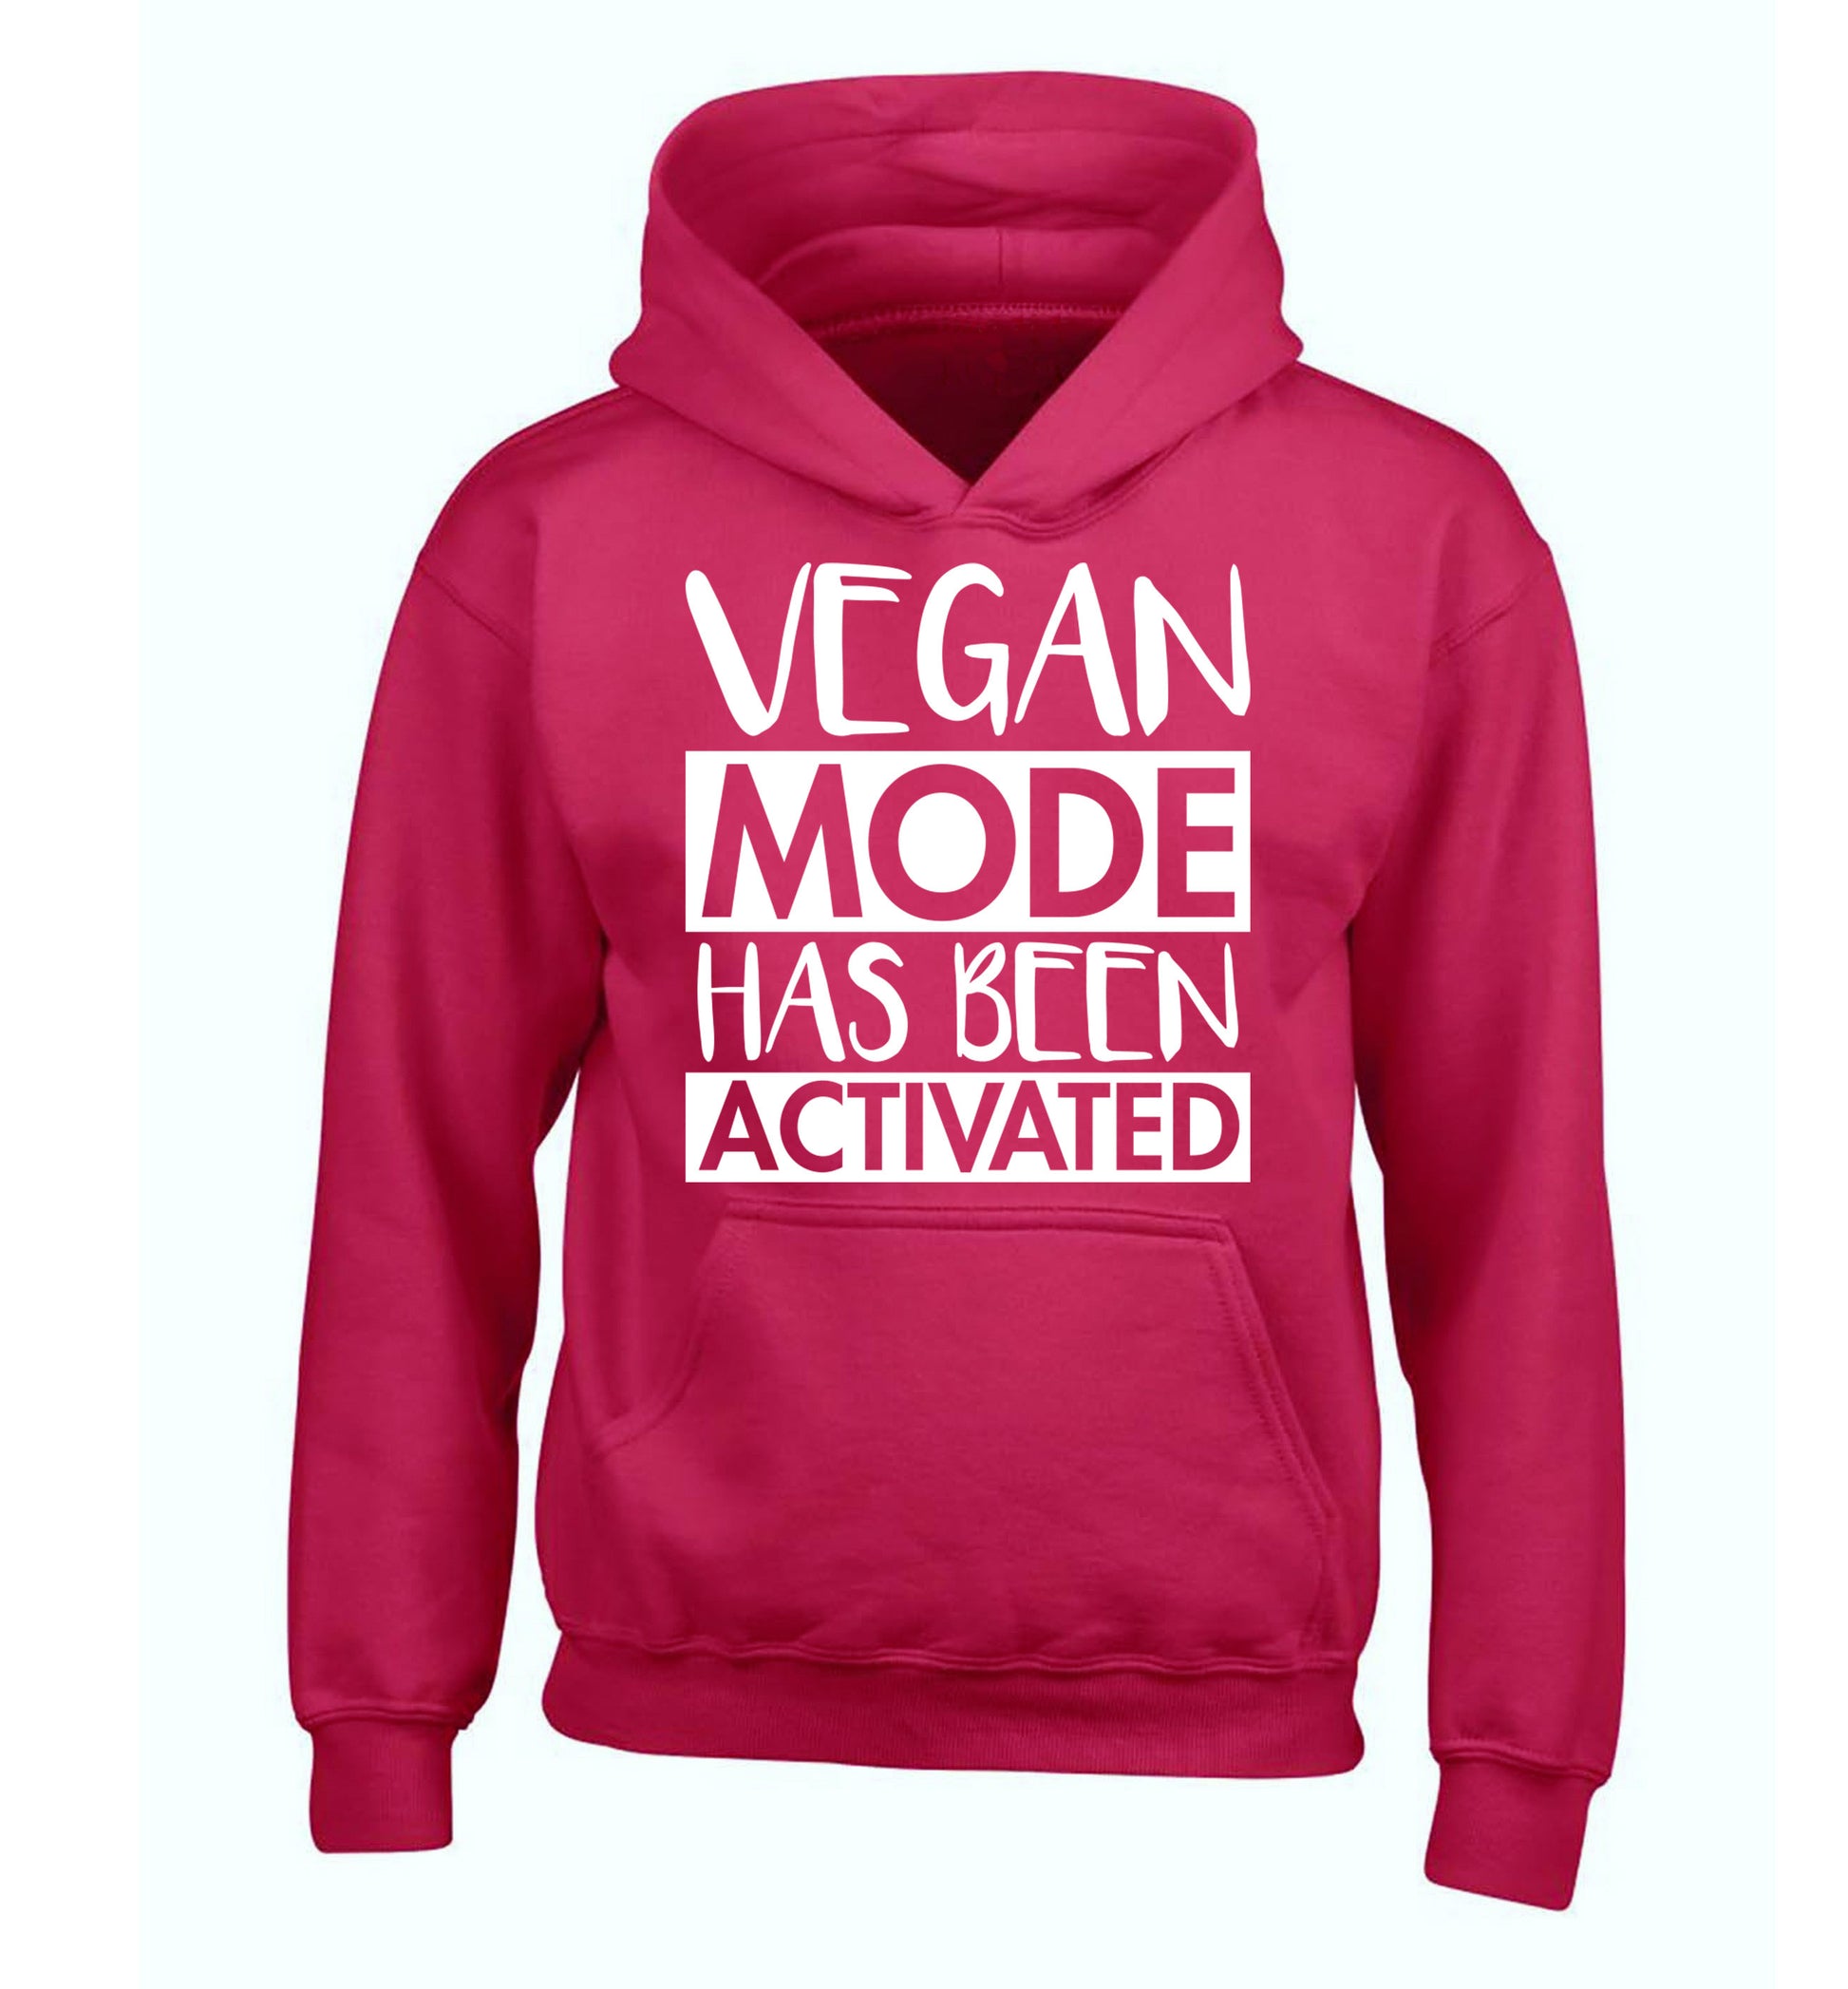 Vegan mode activated children's pink hoodie 12-14 Years